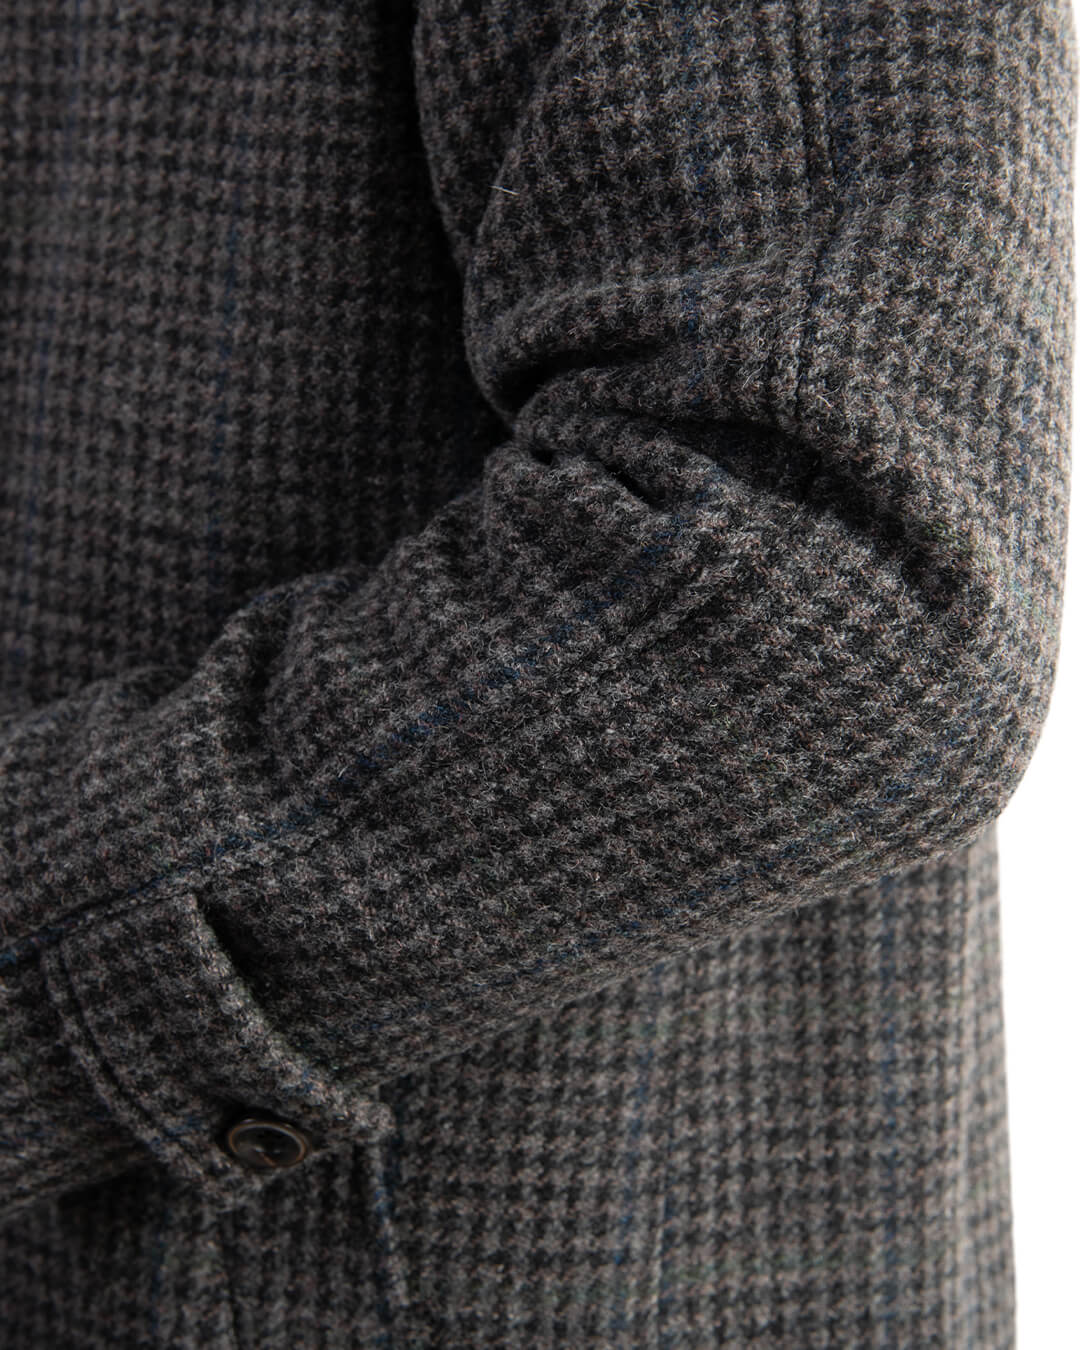 Grey & Brown Check Raglan Sleeve Coat